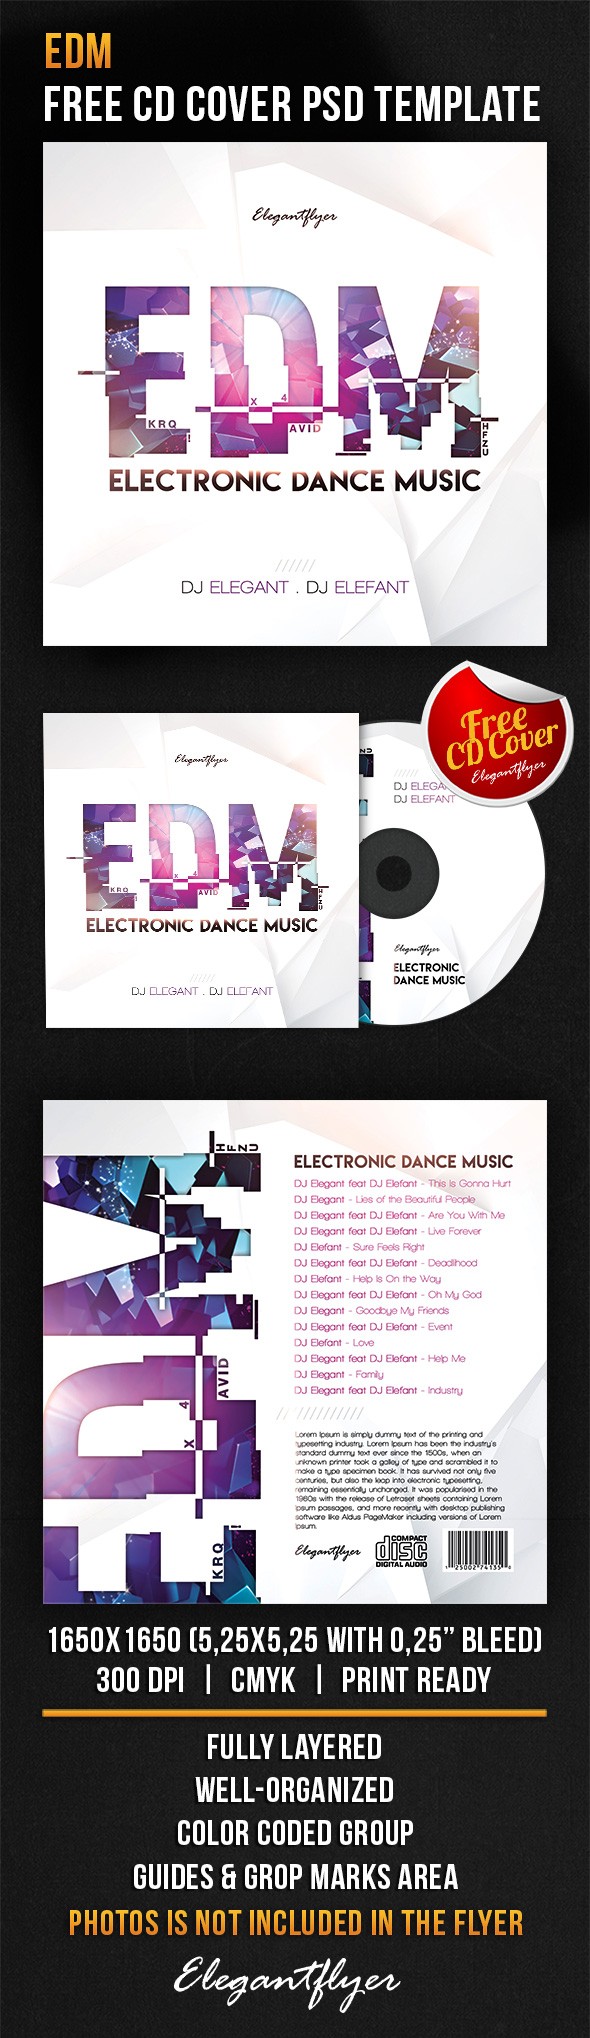 EDM: Elektronische Tanzmusik by ElegantFlyer